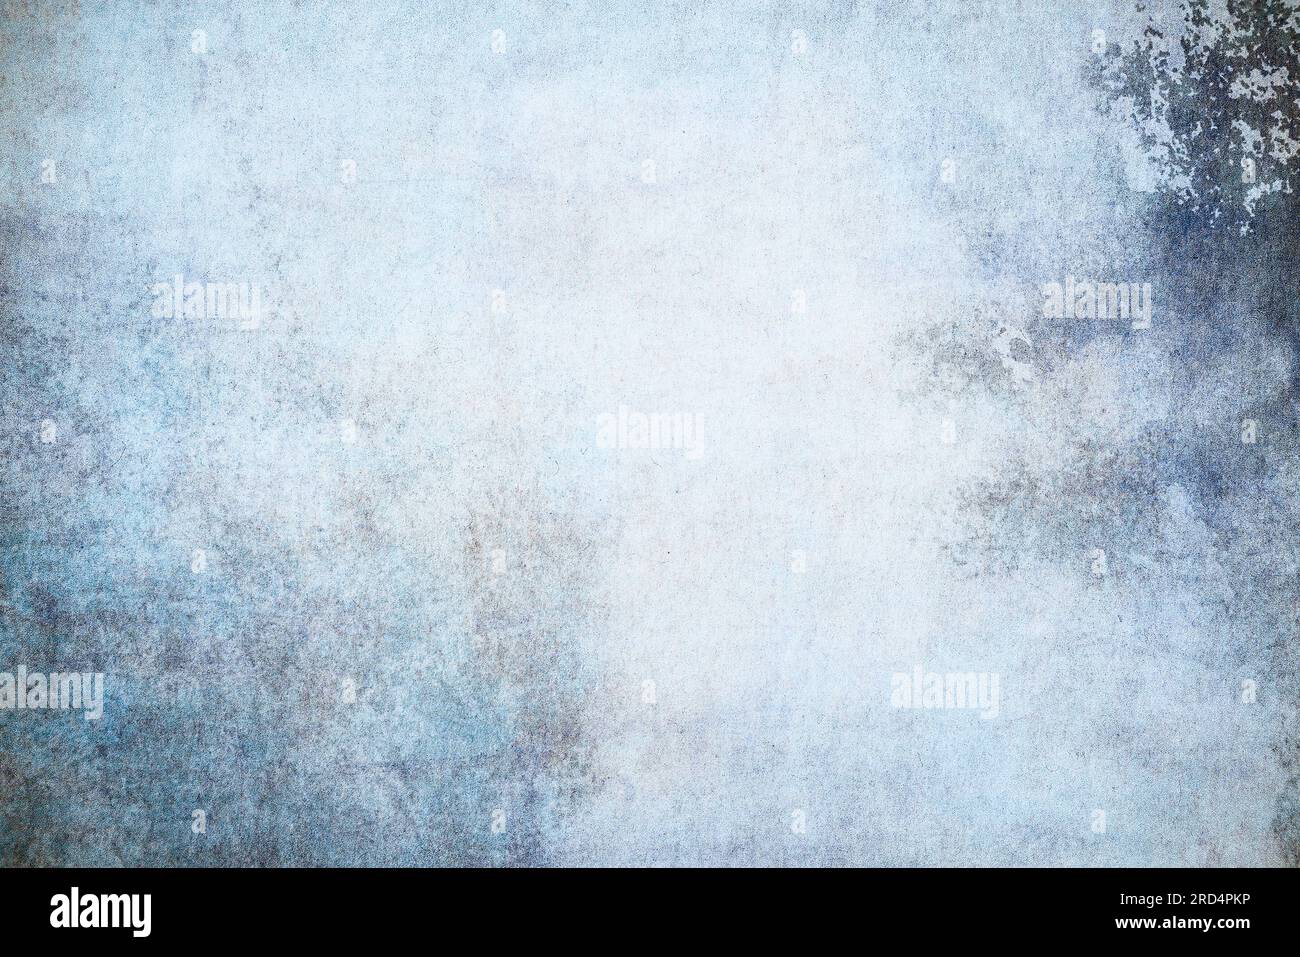 Blue vintage texture. High resolution grunge background. Stock Photo